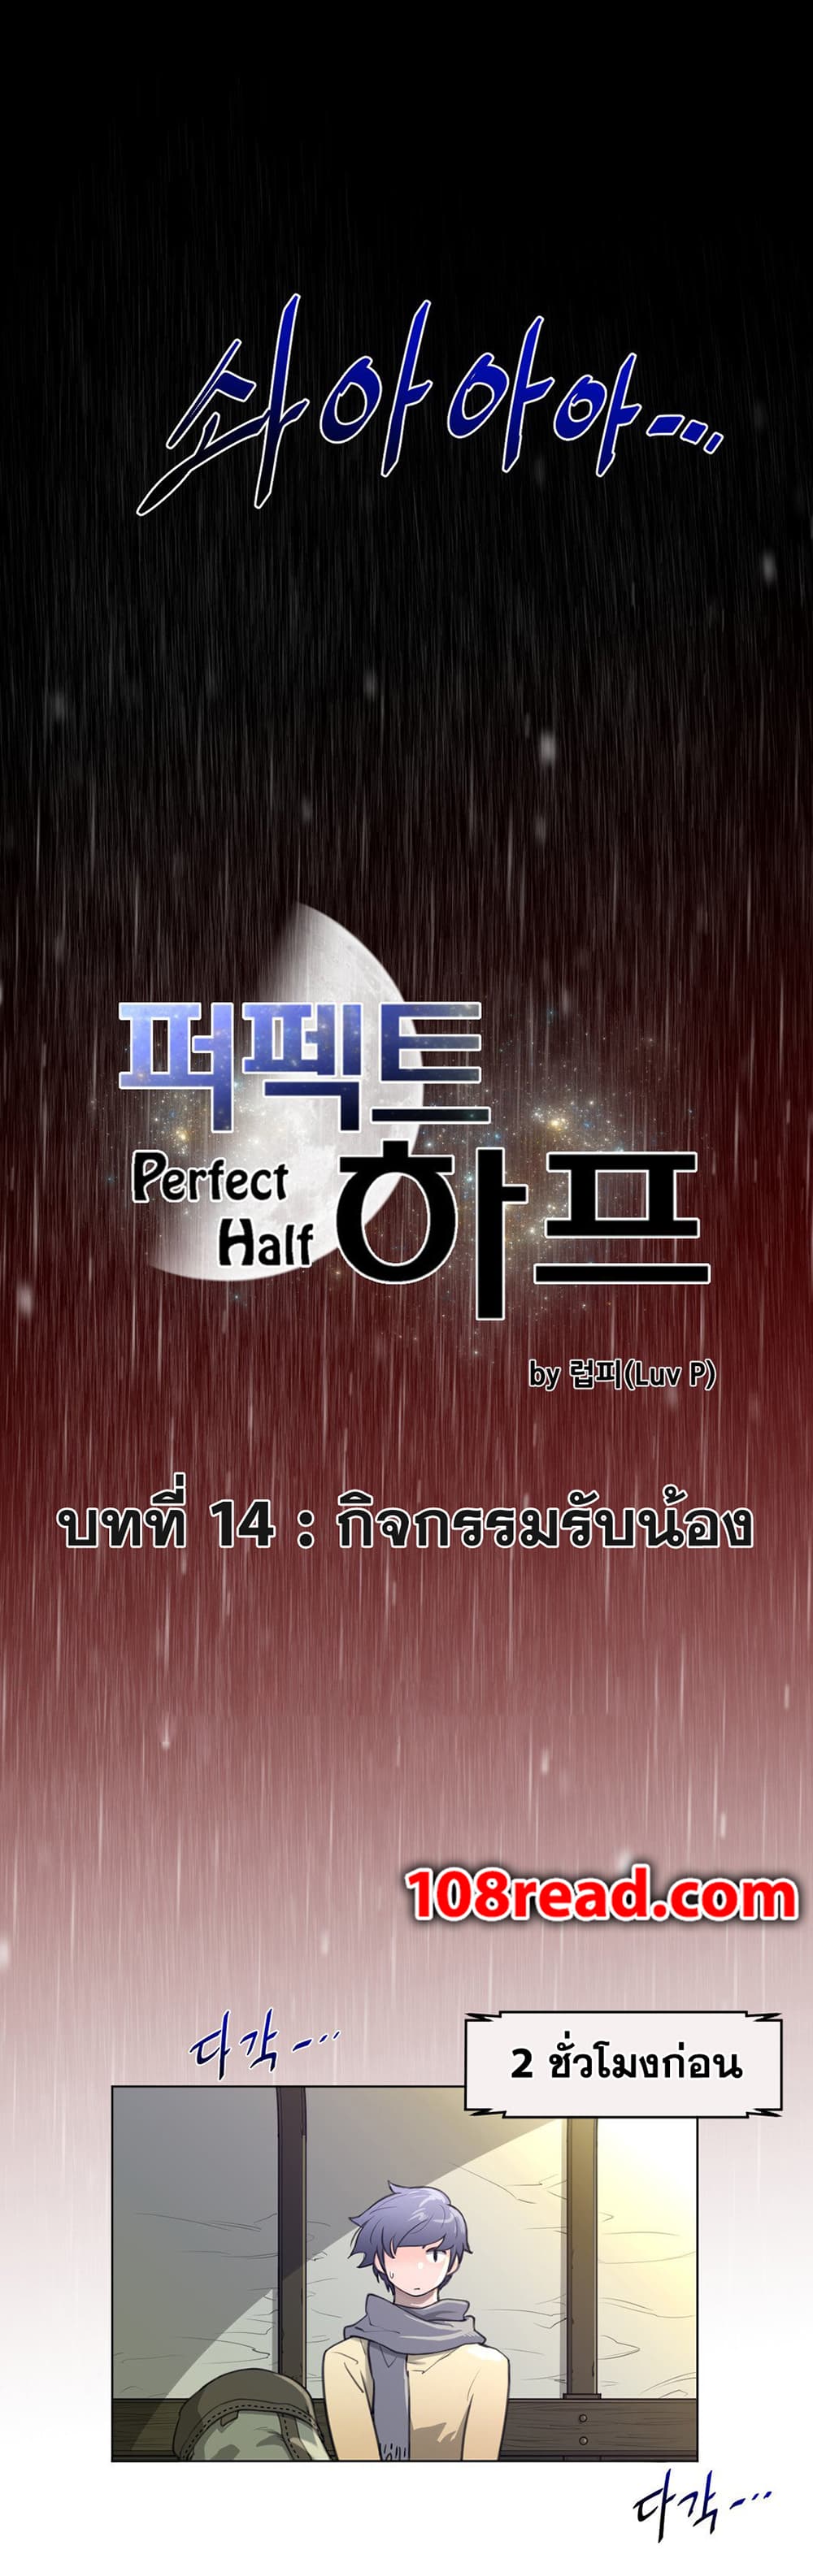 Perfect Half 14 (6)